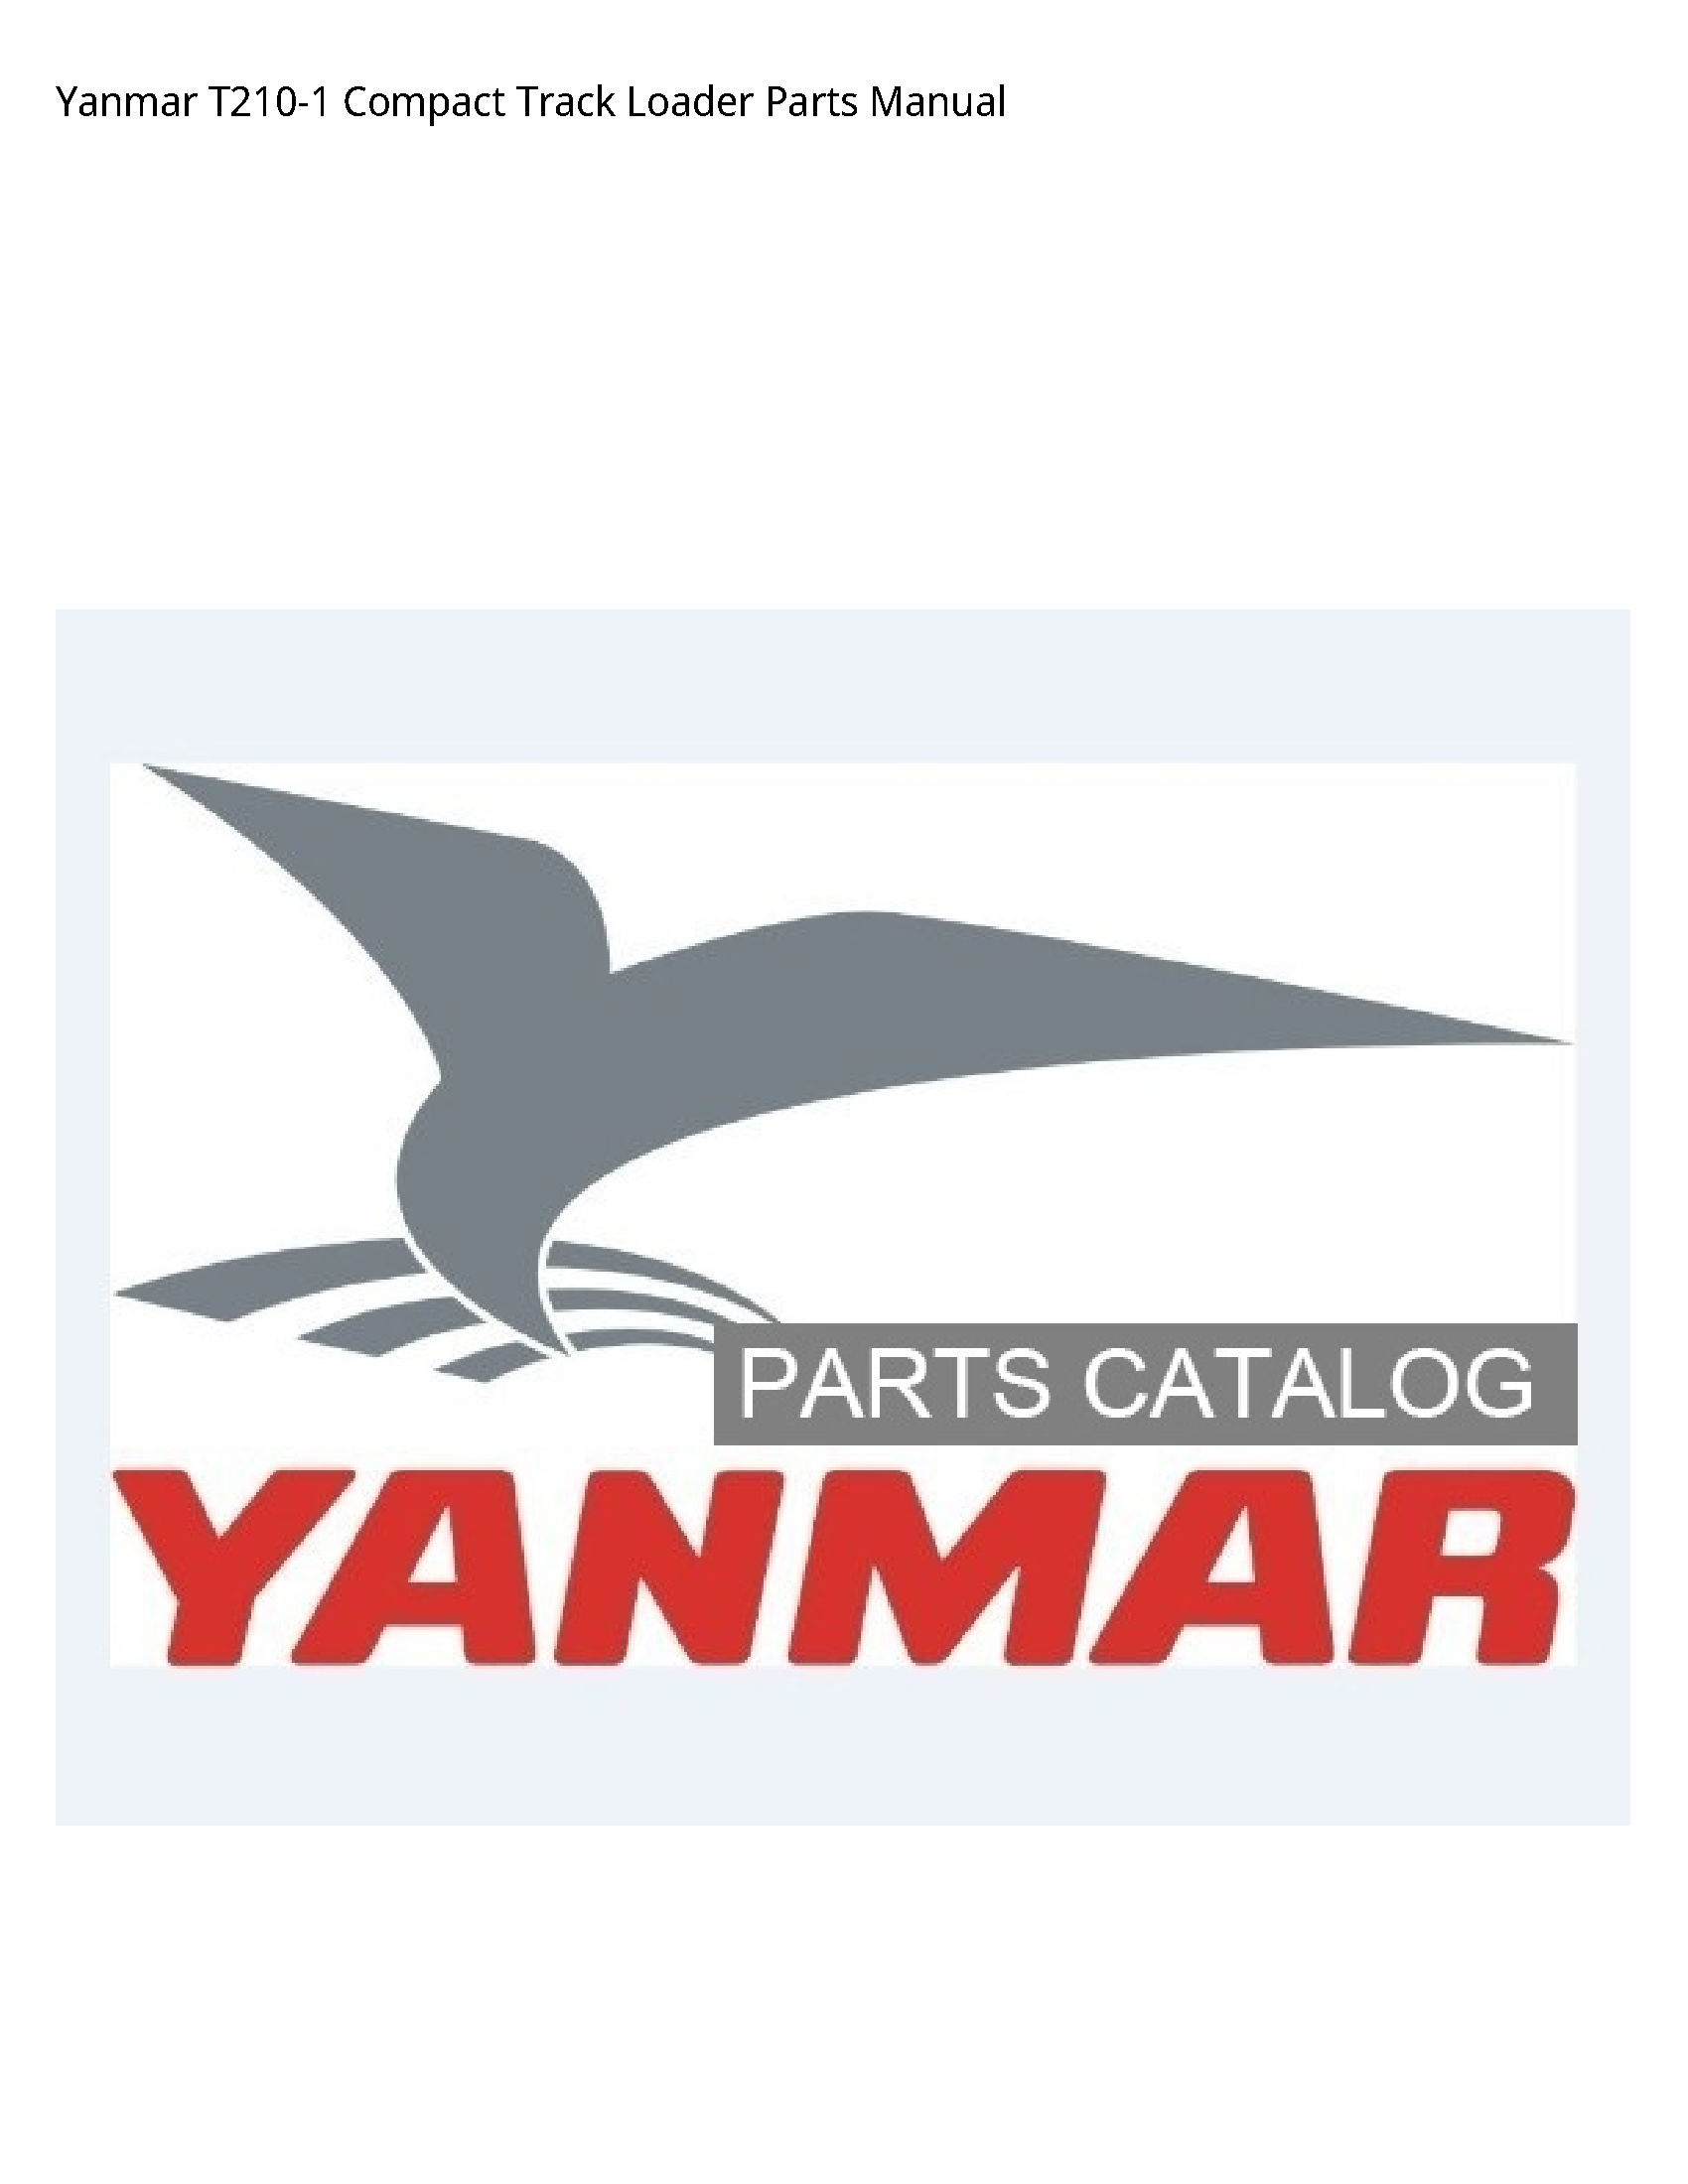 Yanmar T210-1 Compact Track Loader Parts manual